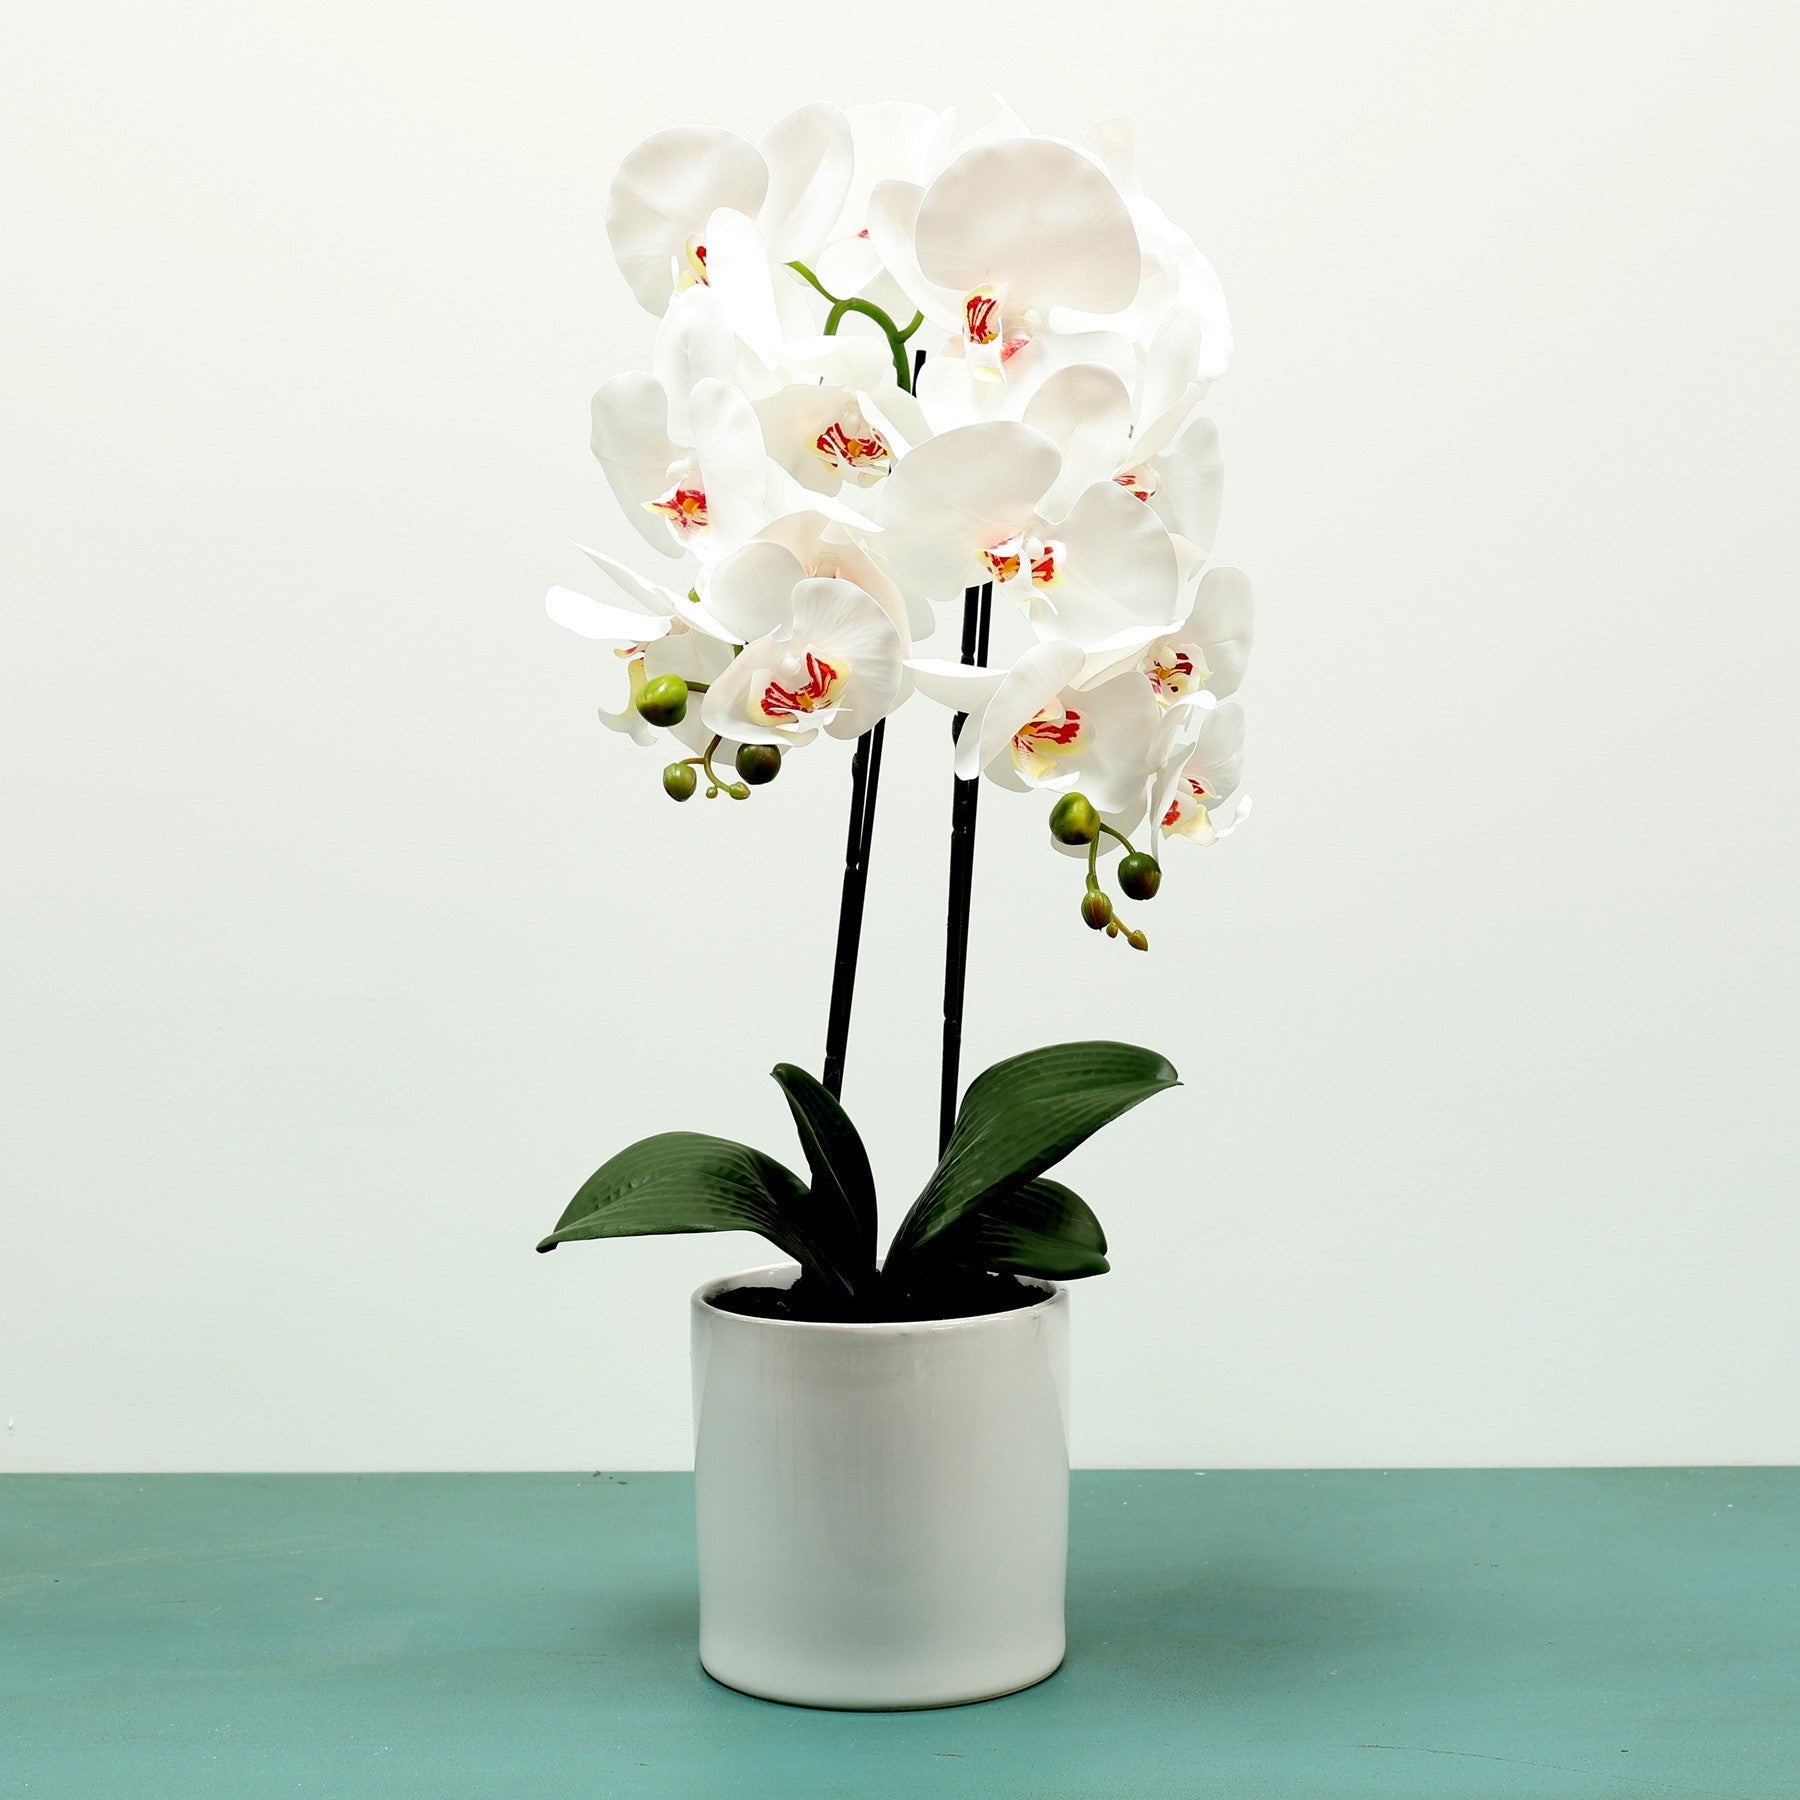 View White Aragon Phalaenopsis in Ceramic Pot 2 stems information